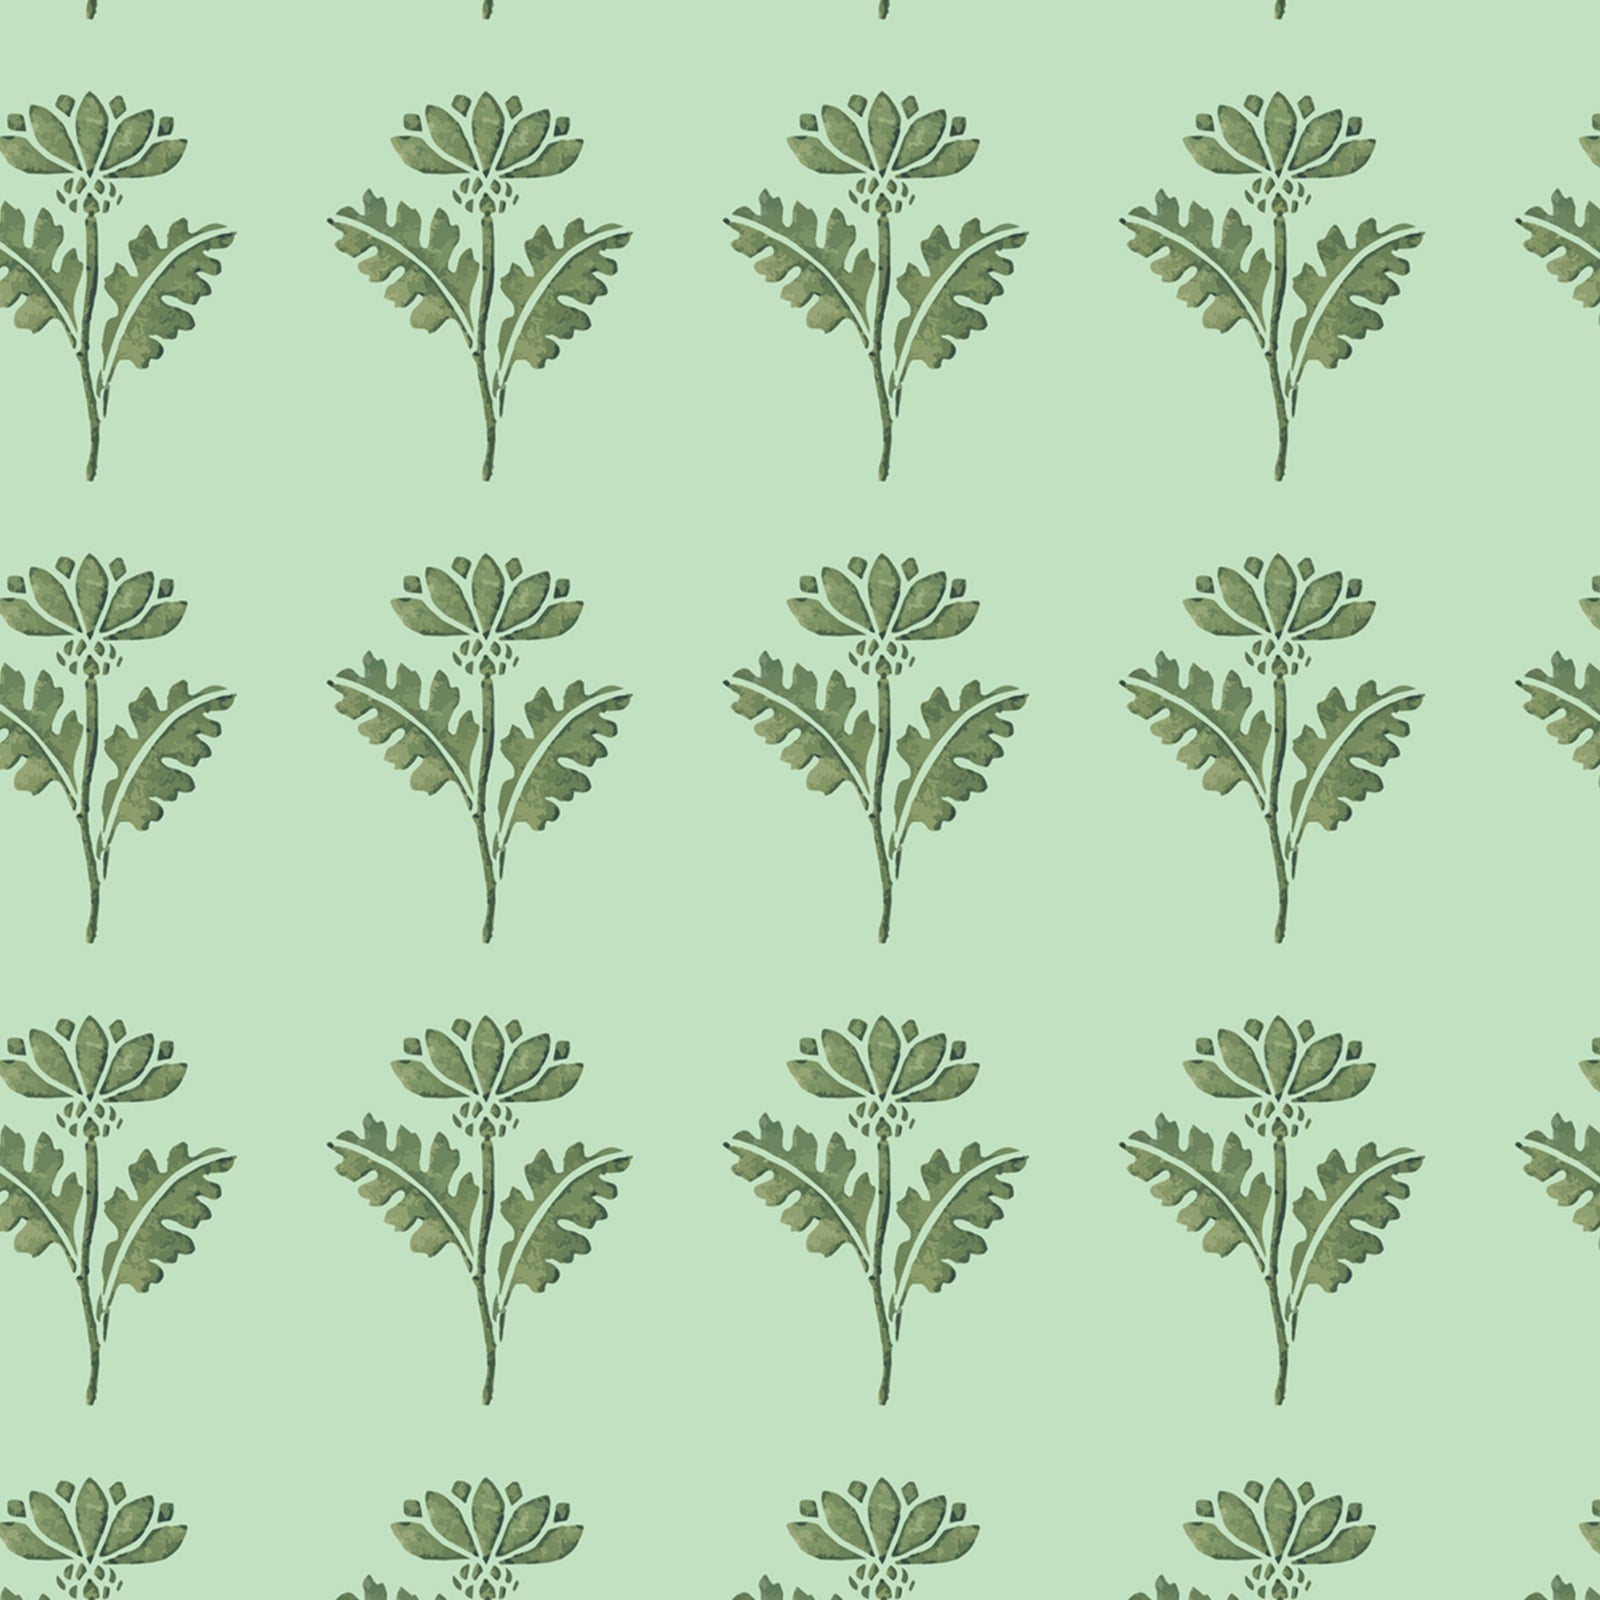 Green Floral Design Wallpaper for Walls